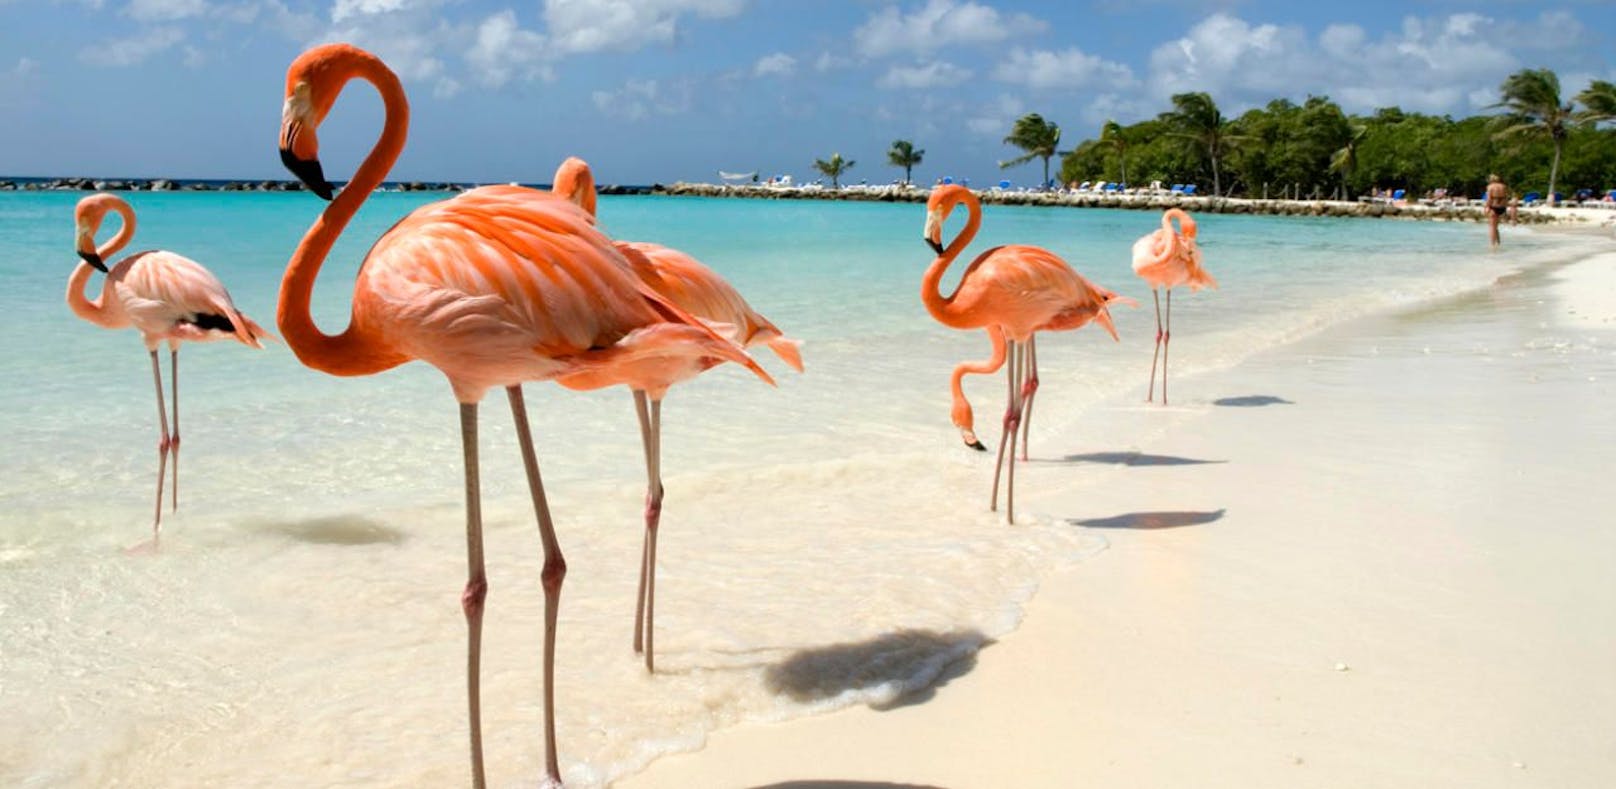 Flamingo-Manager auf den Bahamas gesucht